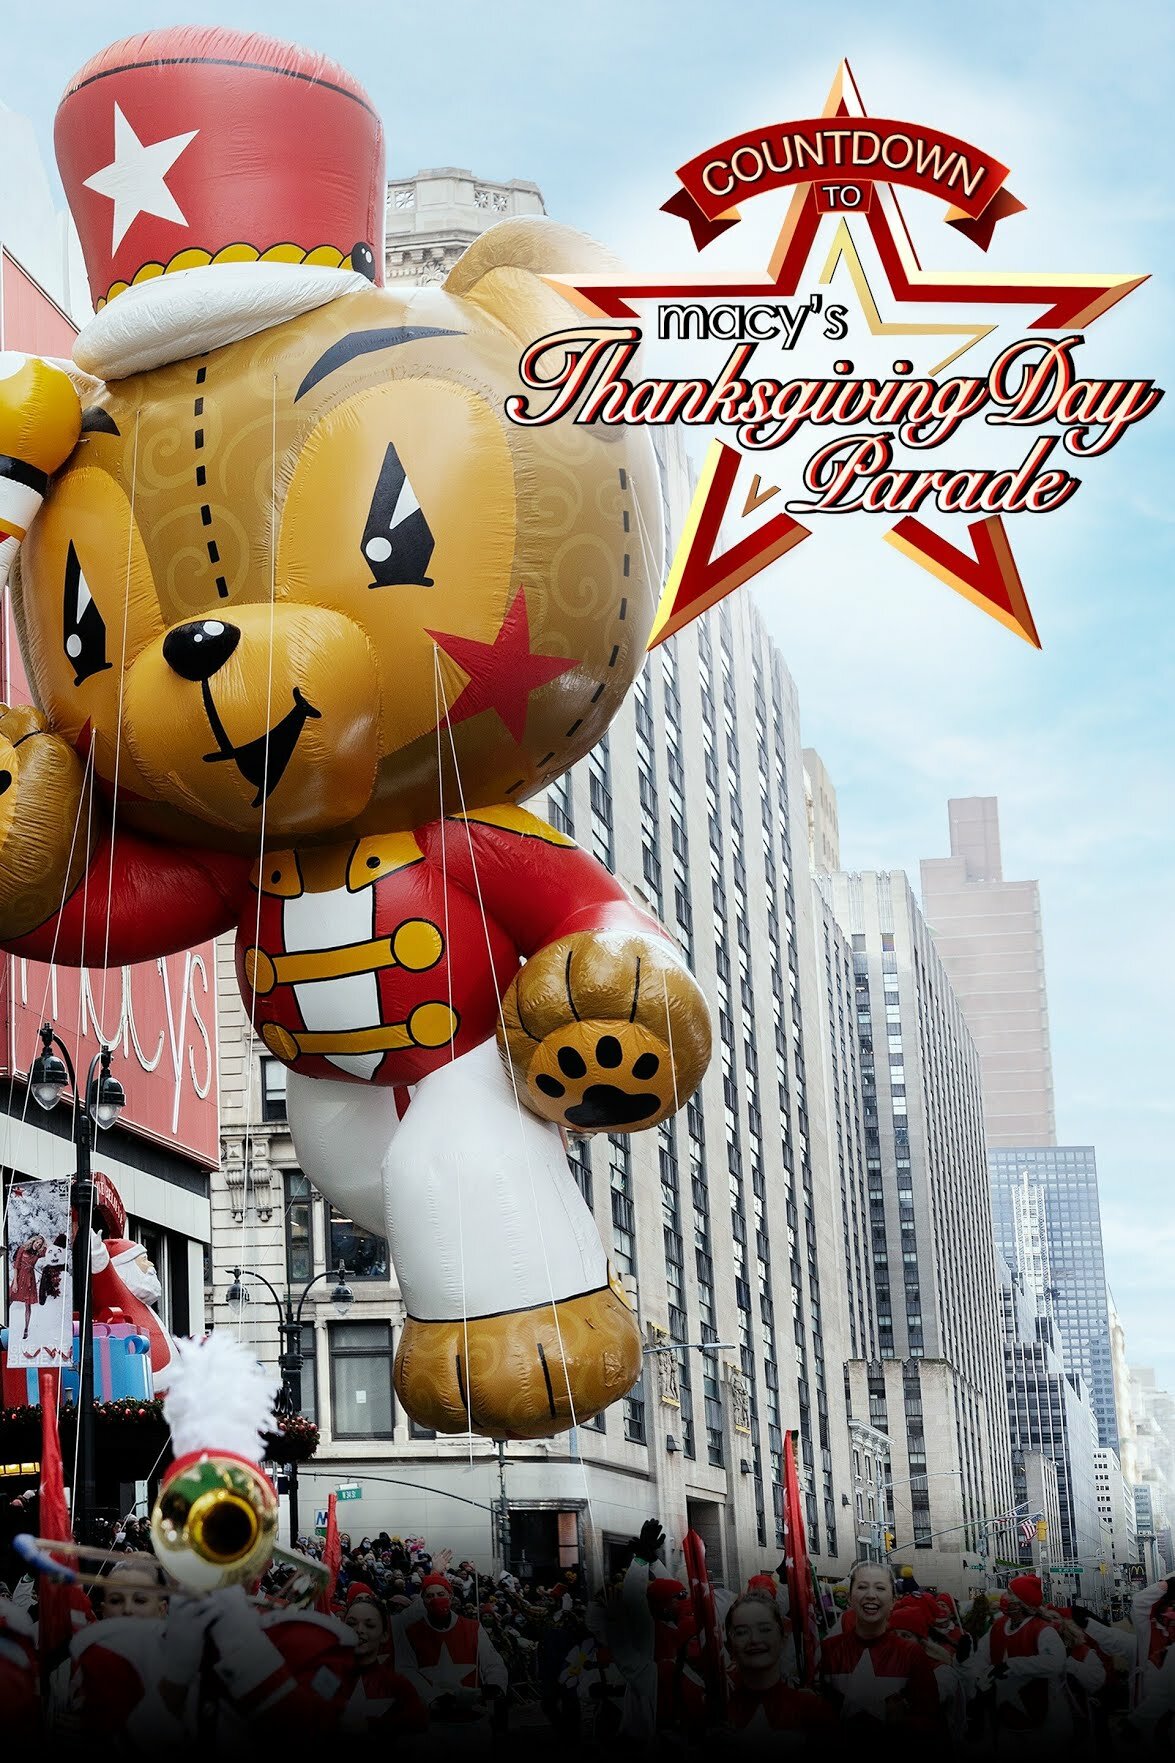 Countdown to Macy's Thanksgiving Day Parade ne zaman